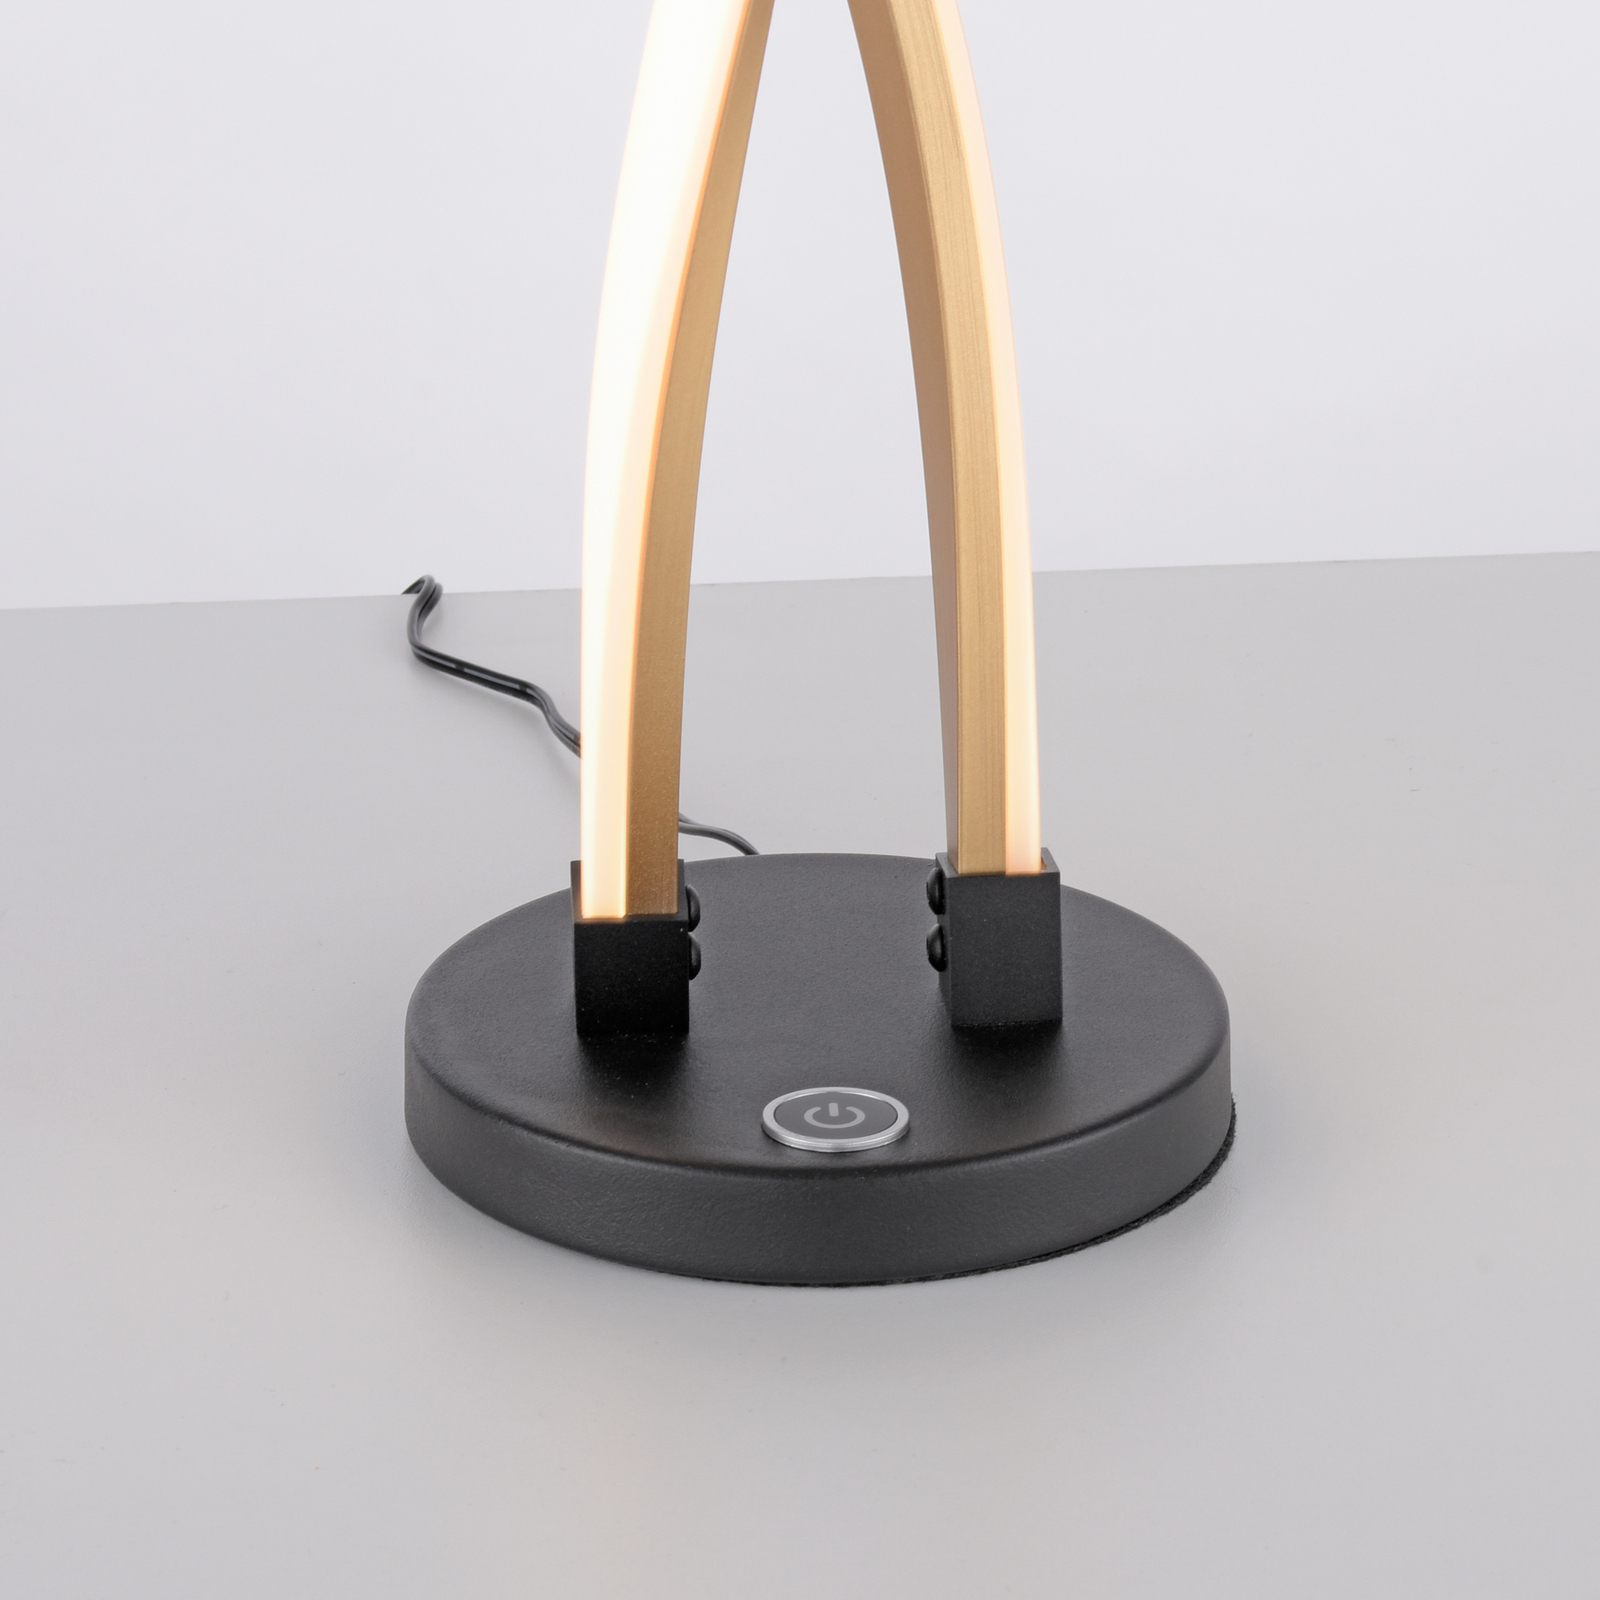 Paul Neuhaus Polina lampe de table LED, dim, dorée